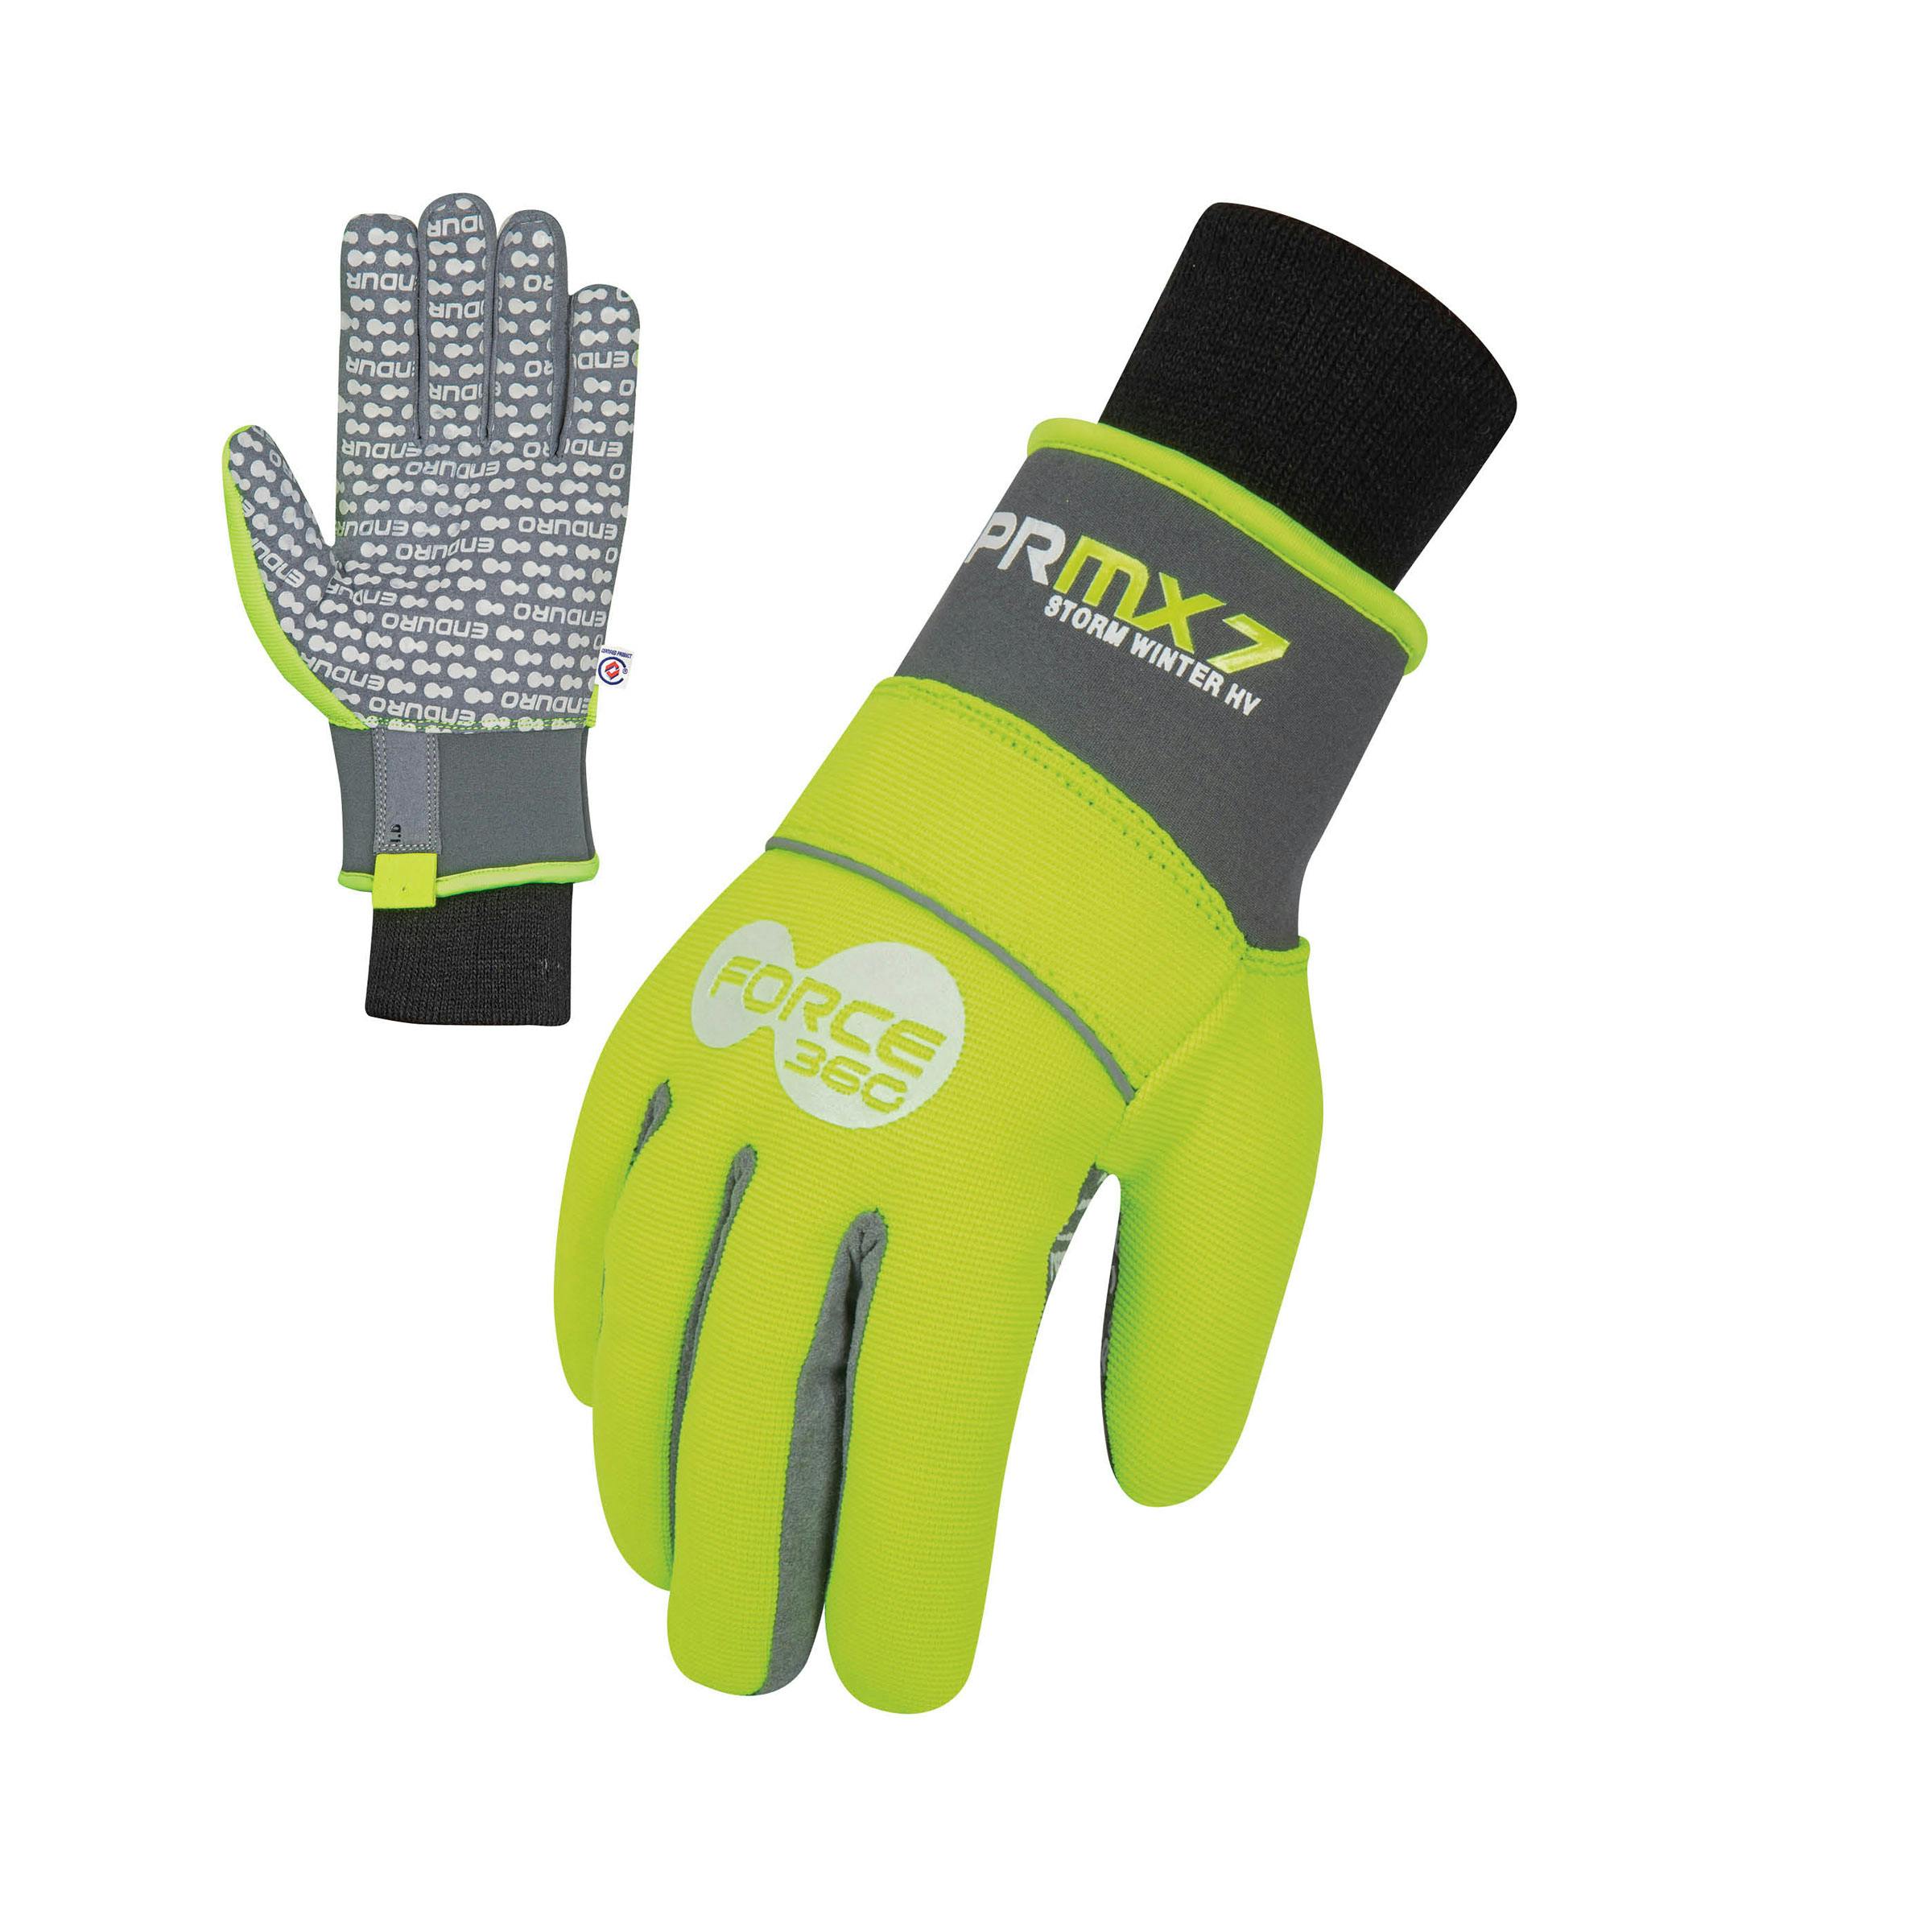 Force360 MX7 Storm Hi-Vis Mechanics Glove